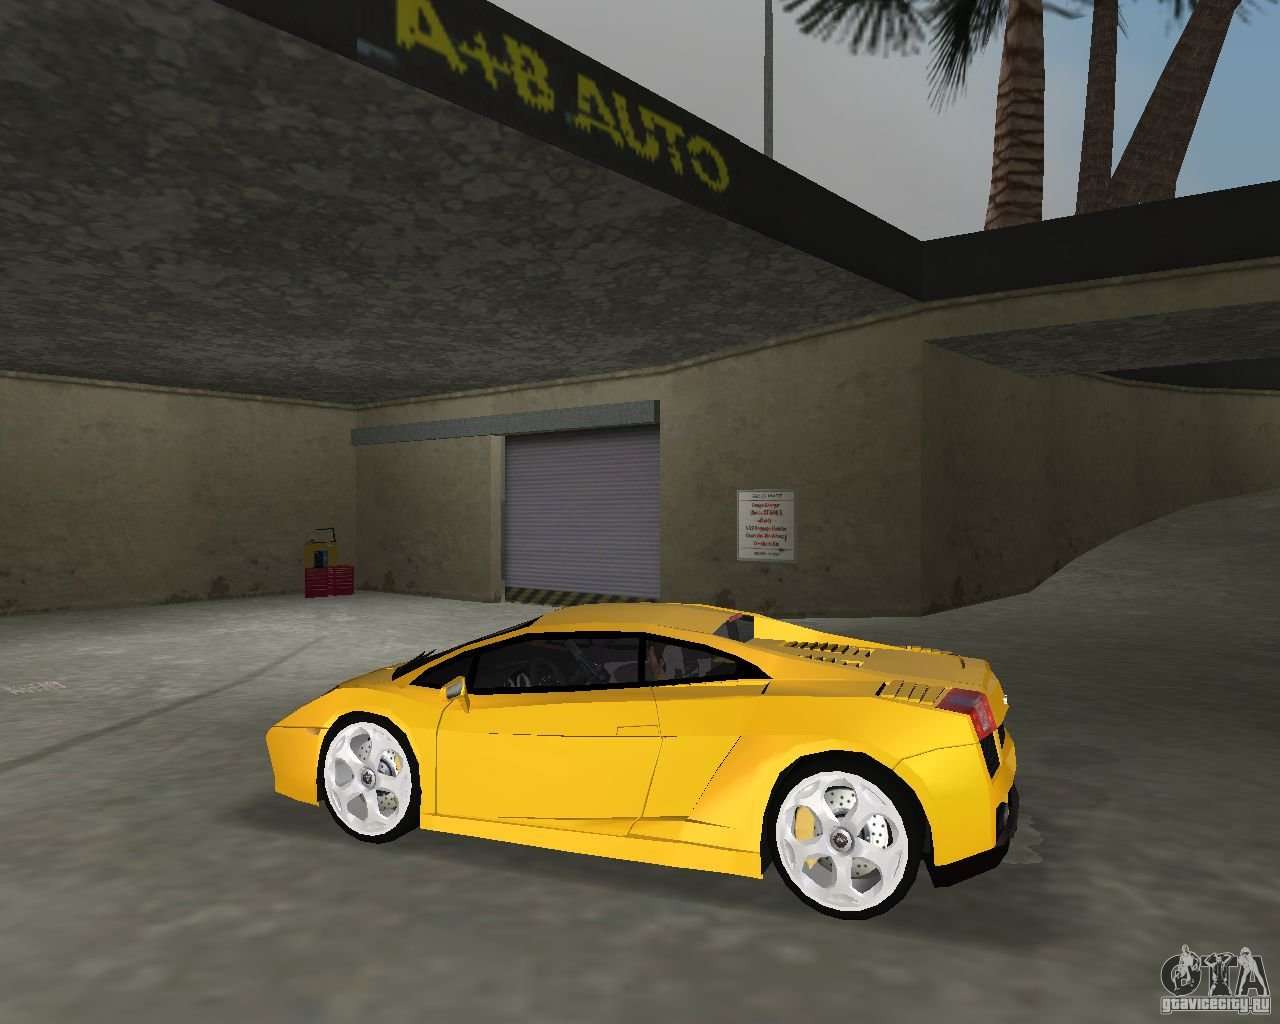 Lamborghini Gallardo v.2 for GTA Vice City